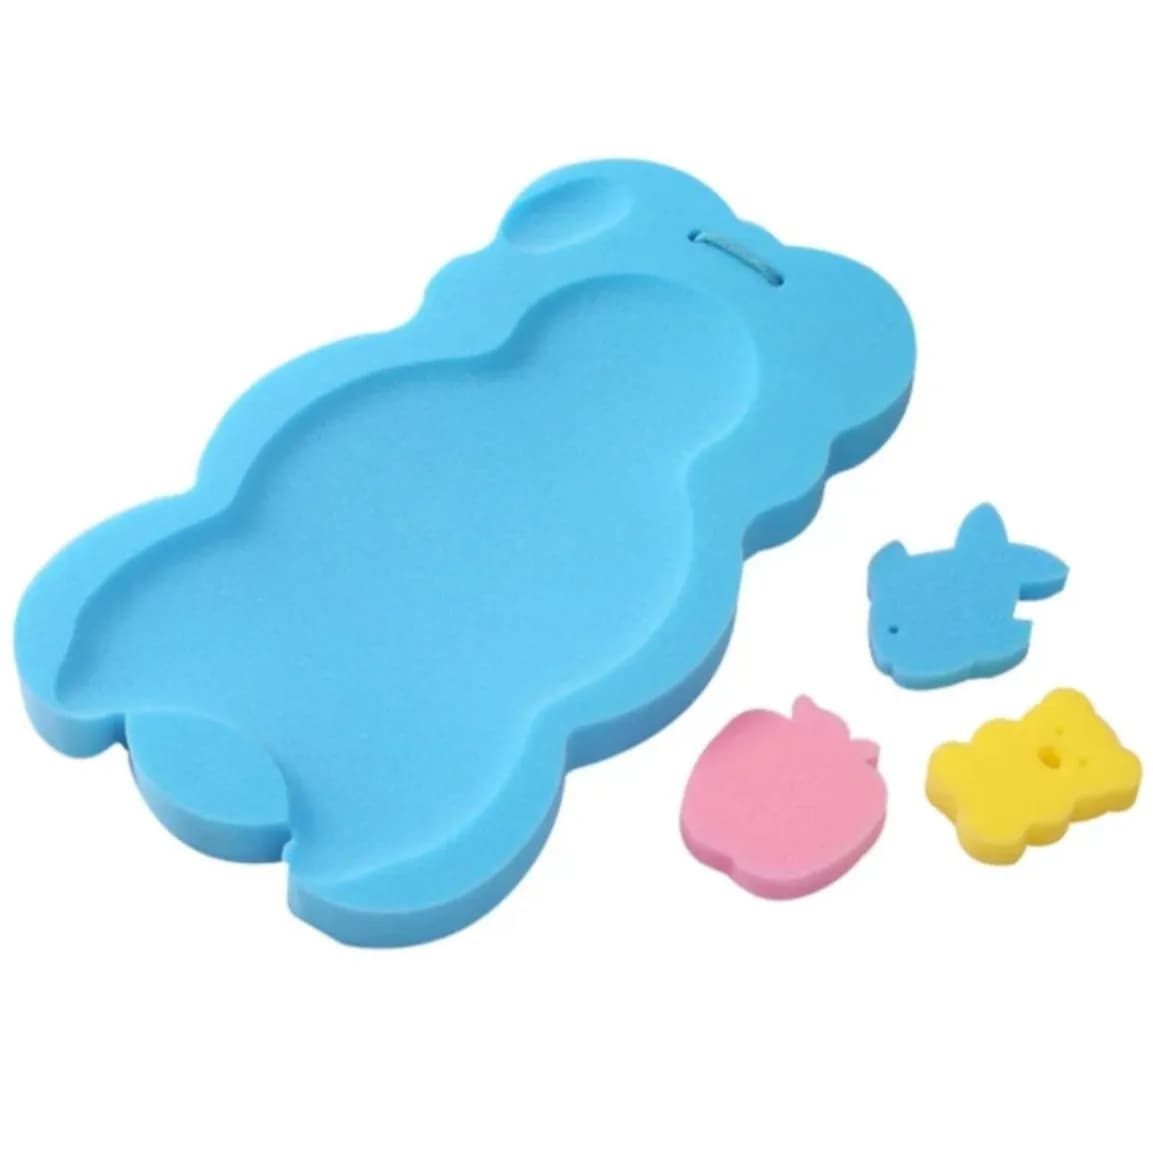 Bath Sponge Bath Mat For Newborn - Blue